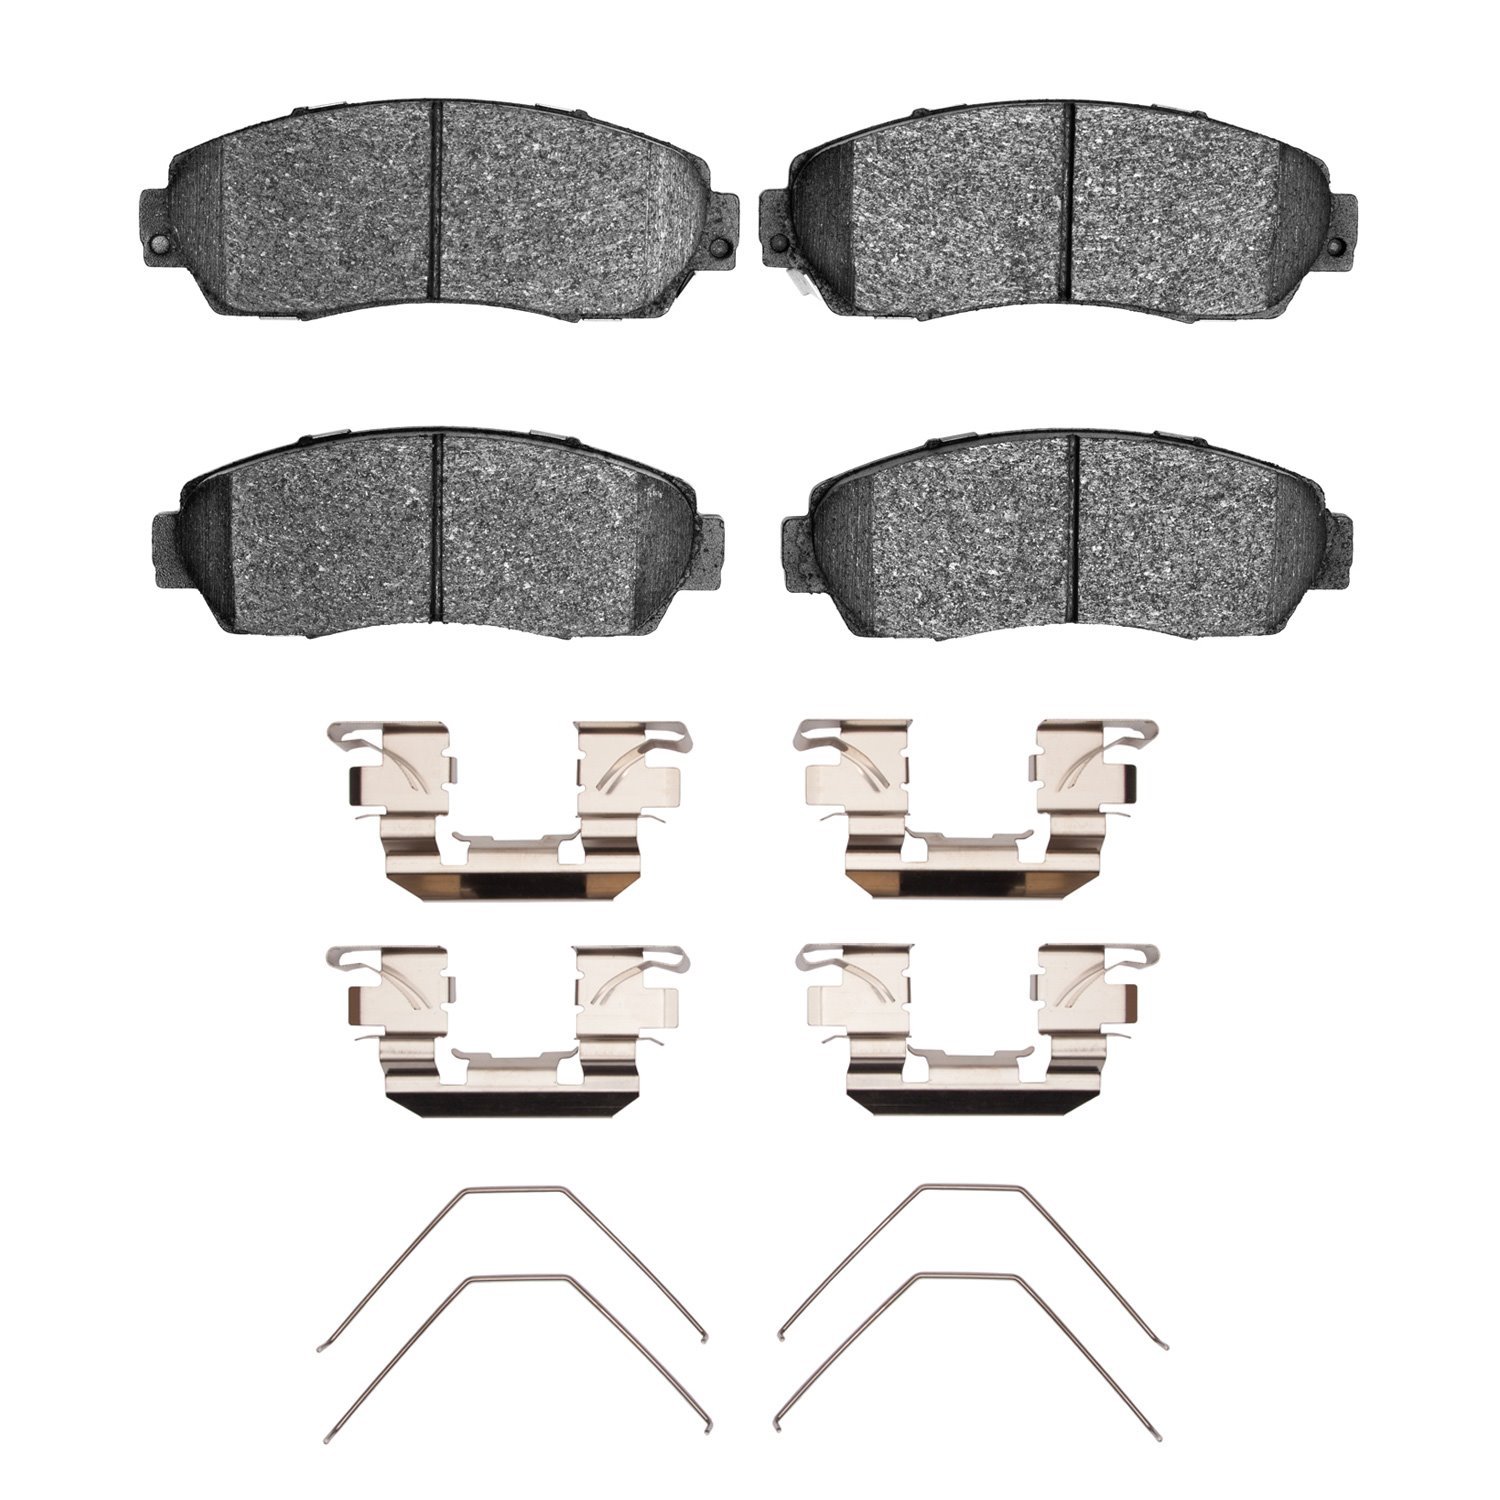 1310-1521-01 3000-Series Ceramic Brake Pads & Hardware Kit, Fits Select Multiple Makes/Models, Position: Front